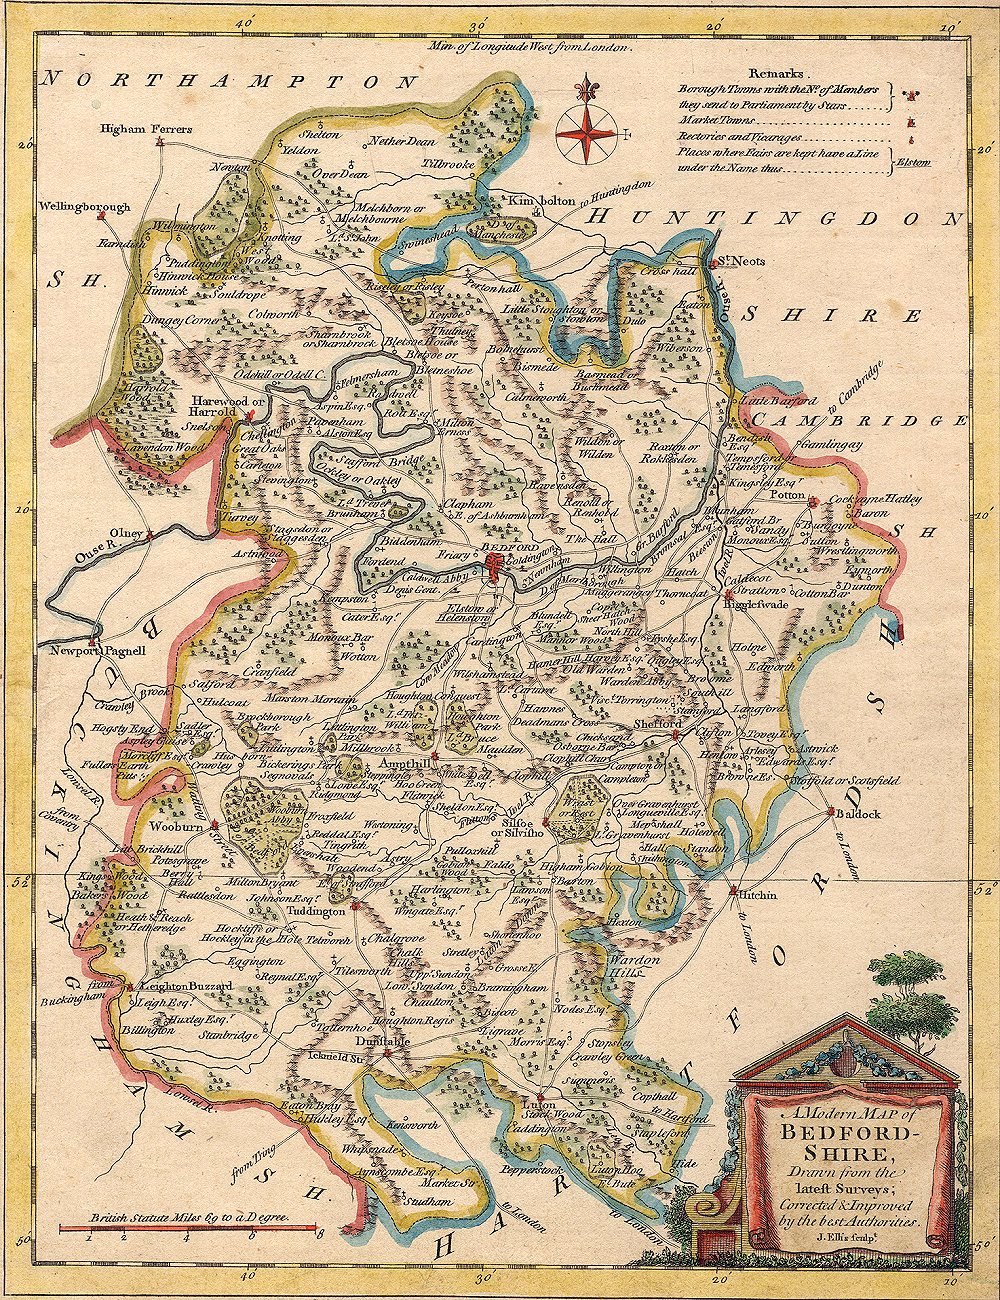 Bedfordshire 1766